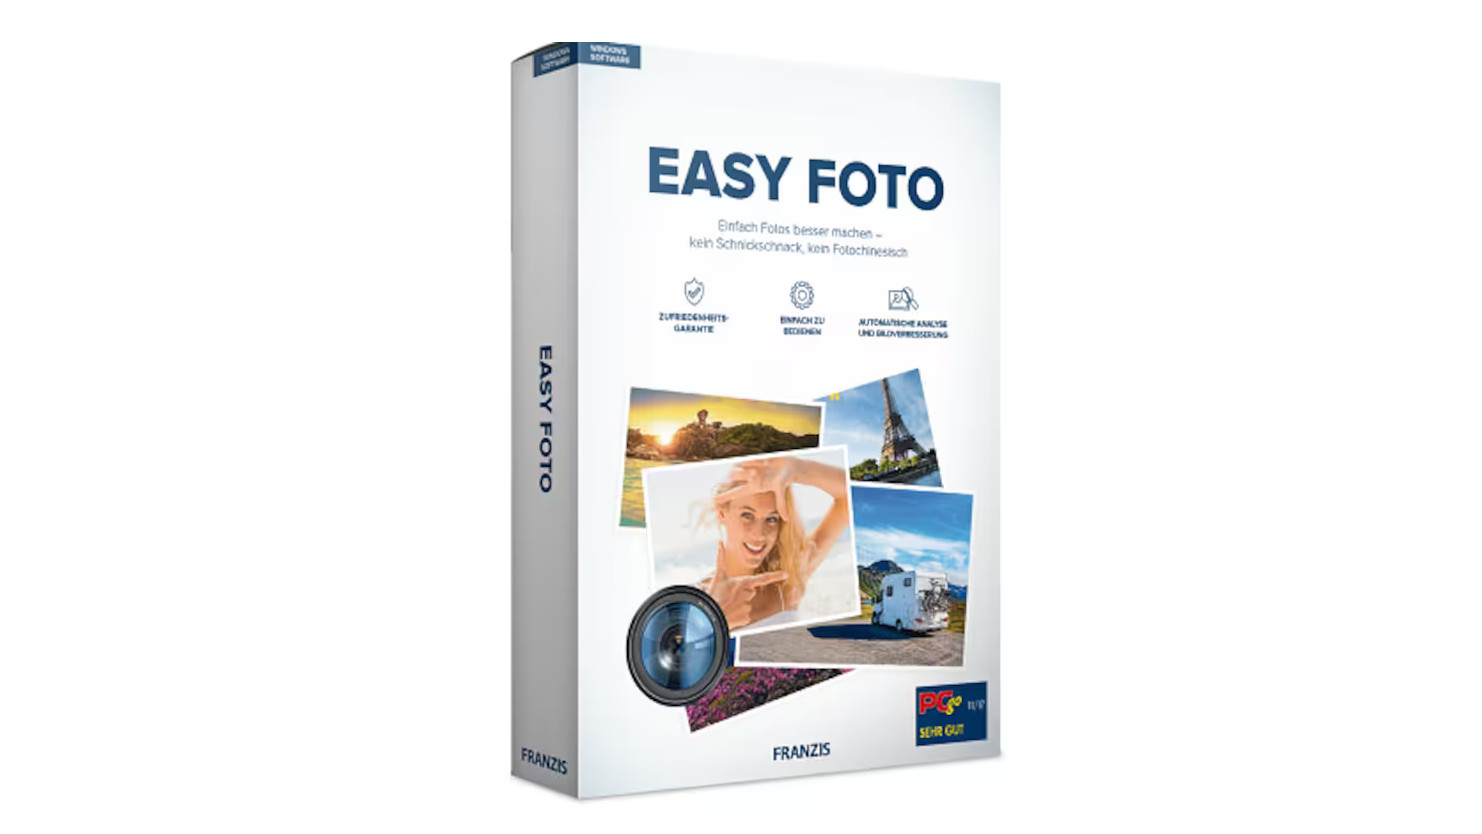 [$ 33.89] Easy Foto - Project Software Key (Lifetime / 1 PC)